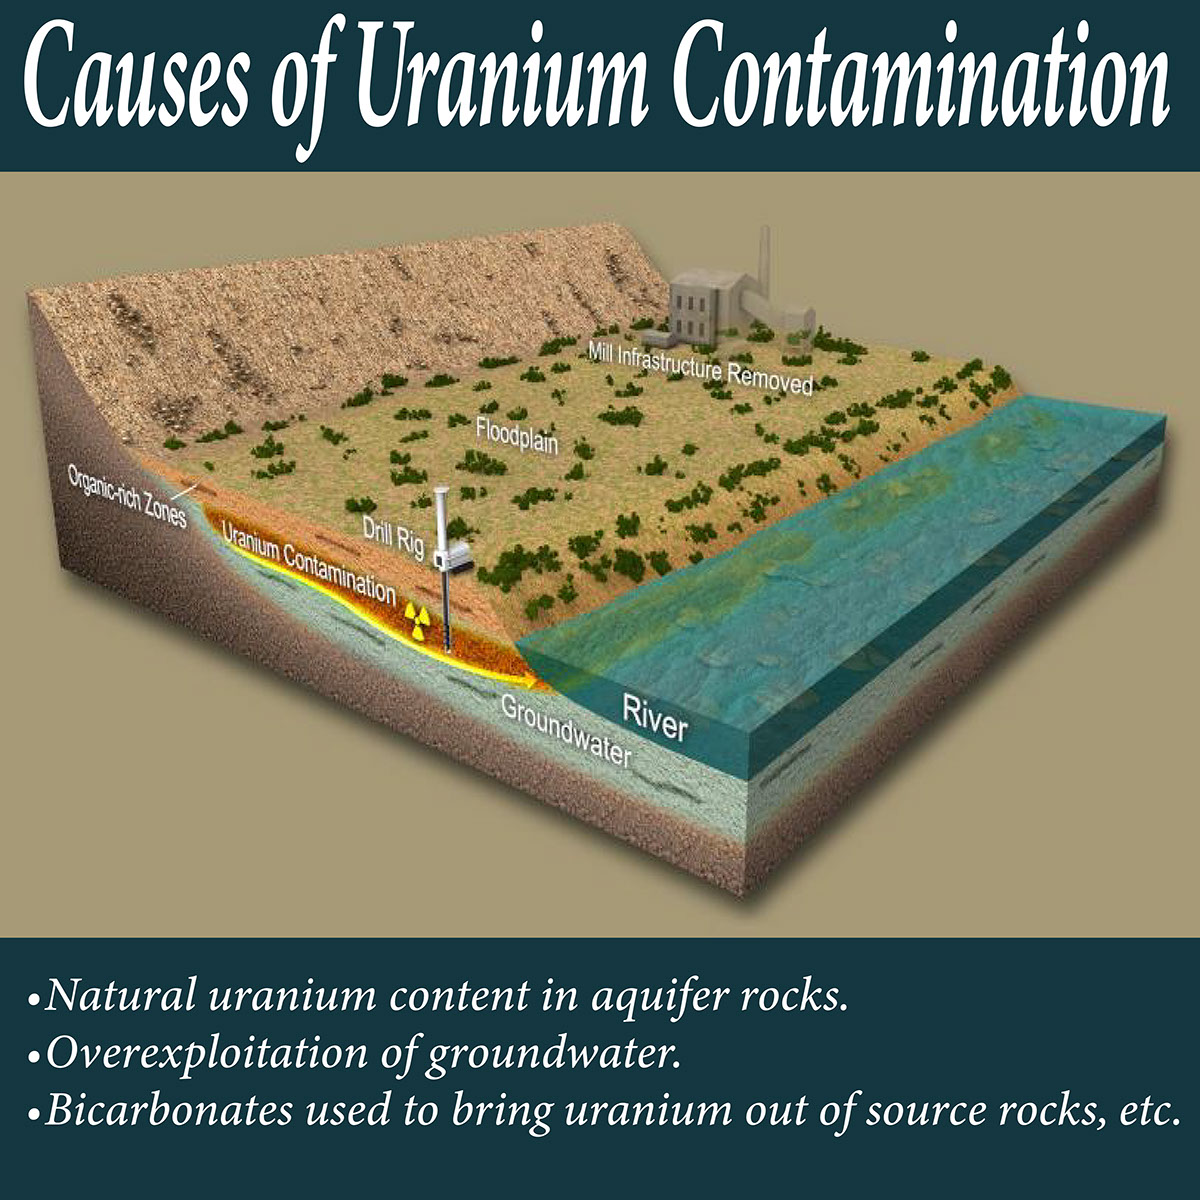 Uranium contamination in groundwater rendition image